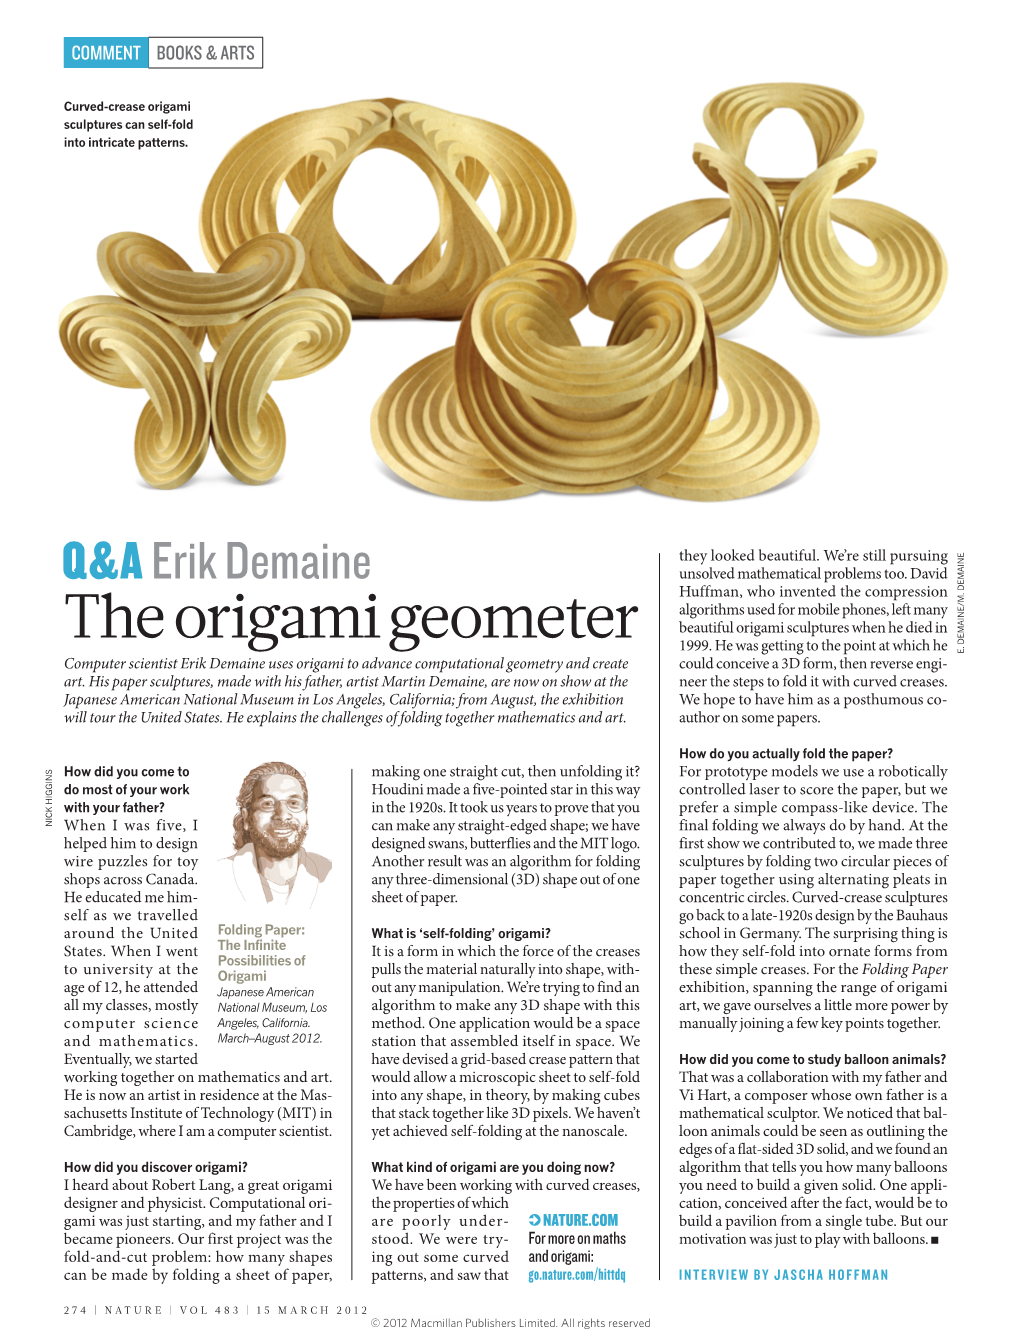 The Origami Geometer 1999